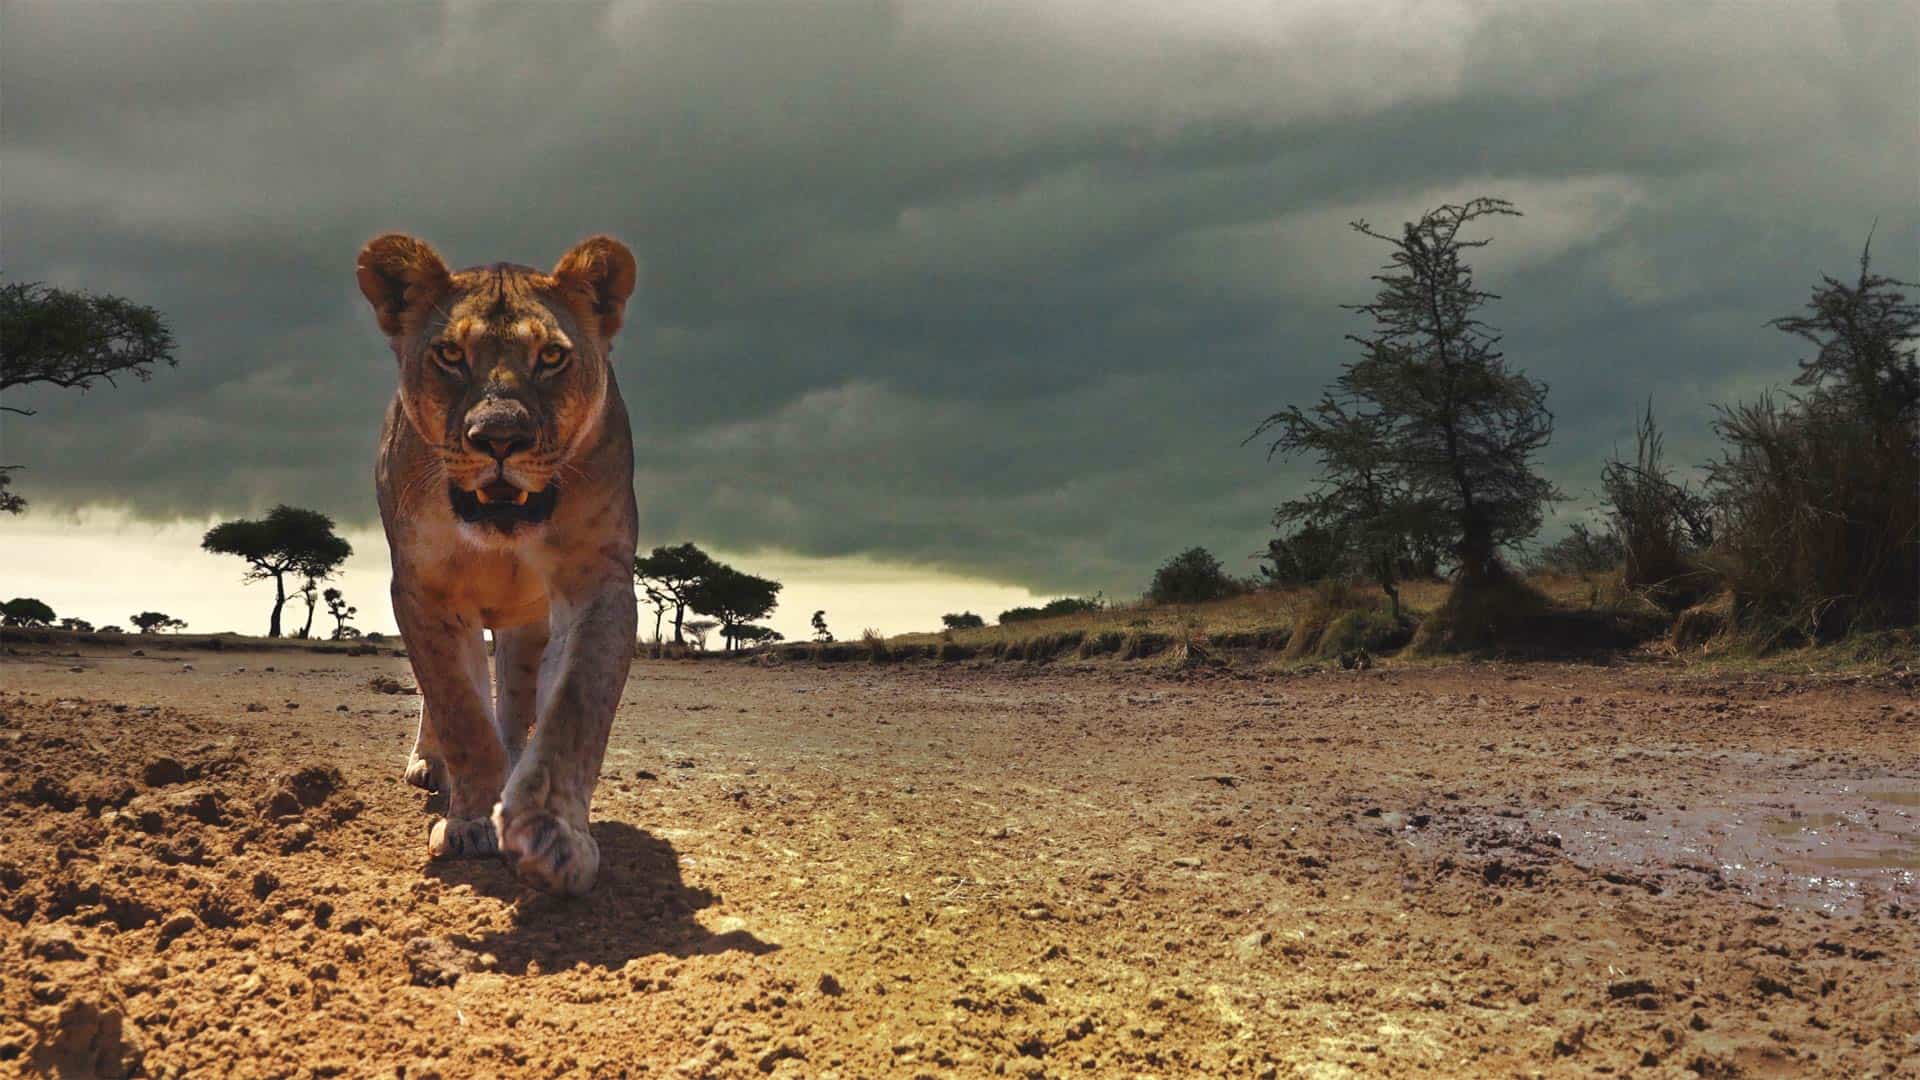 Watch BBC Earth's Serengeti season 2 on DStv